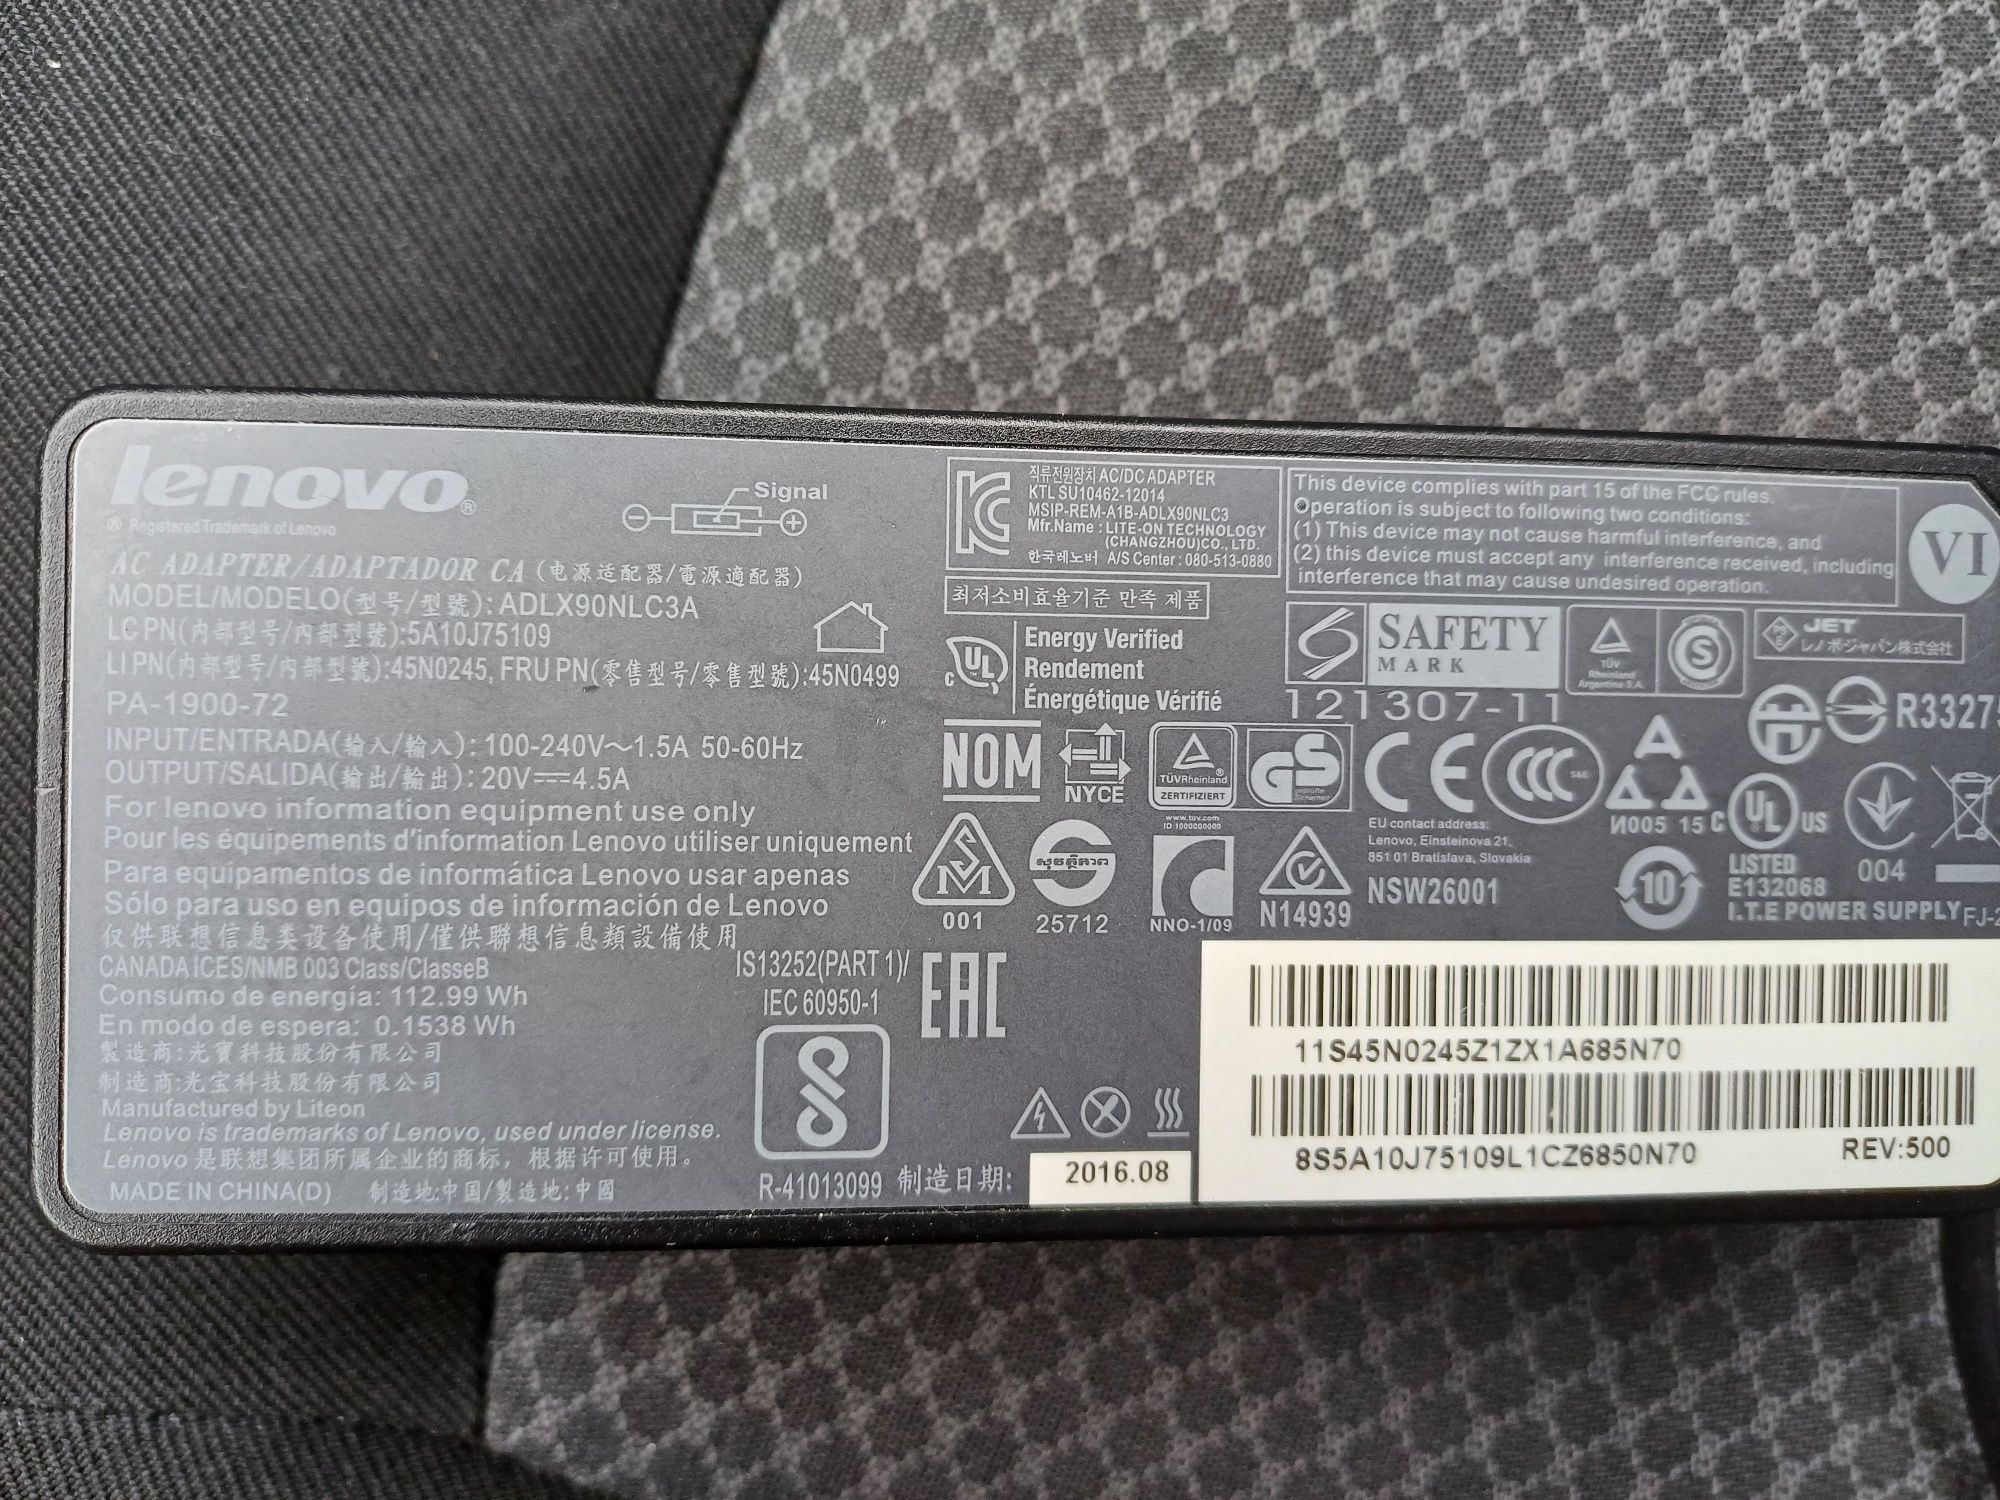 Alimentator incarcator Lenovo 20v PA ADLX